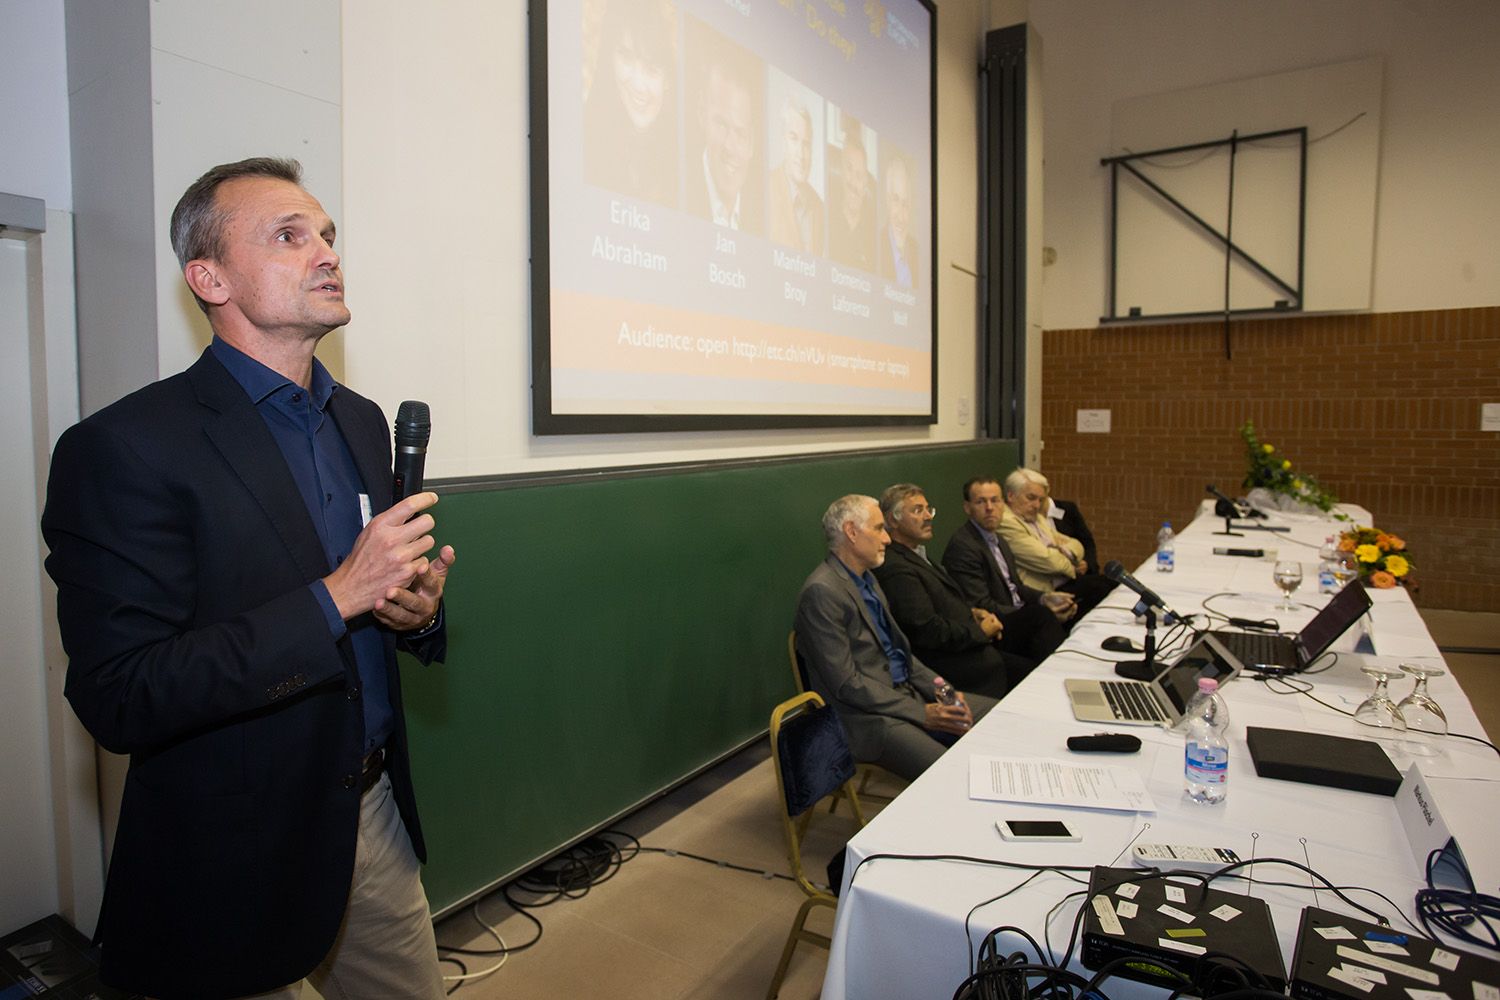 Panel discussion led by Markus Püschel, ETH Zurich